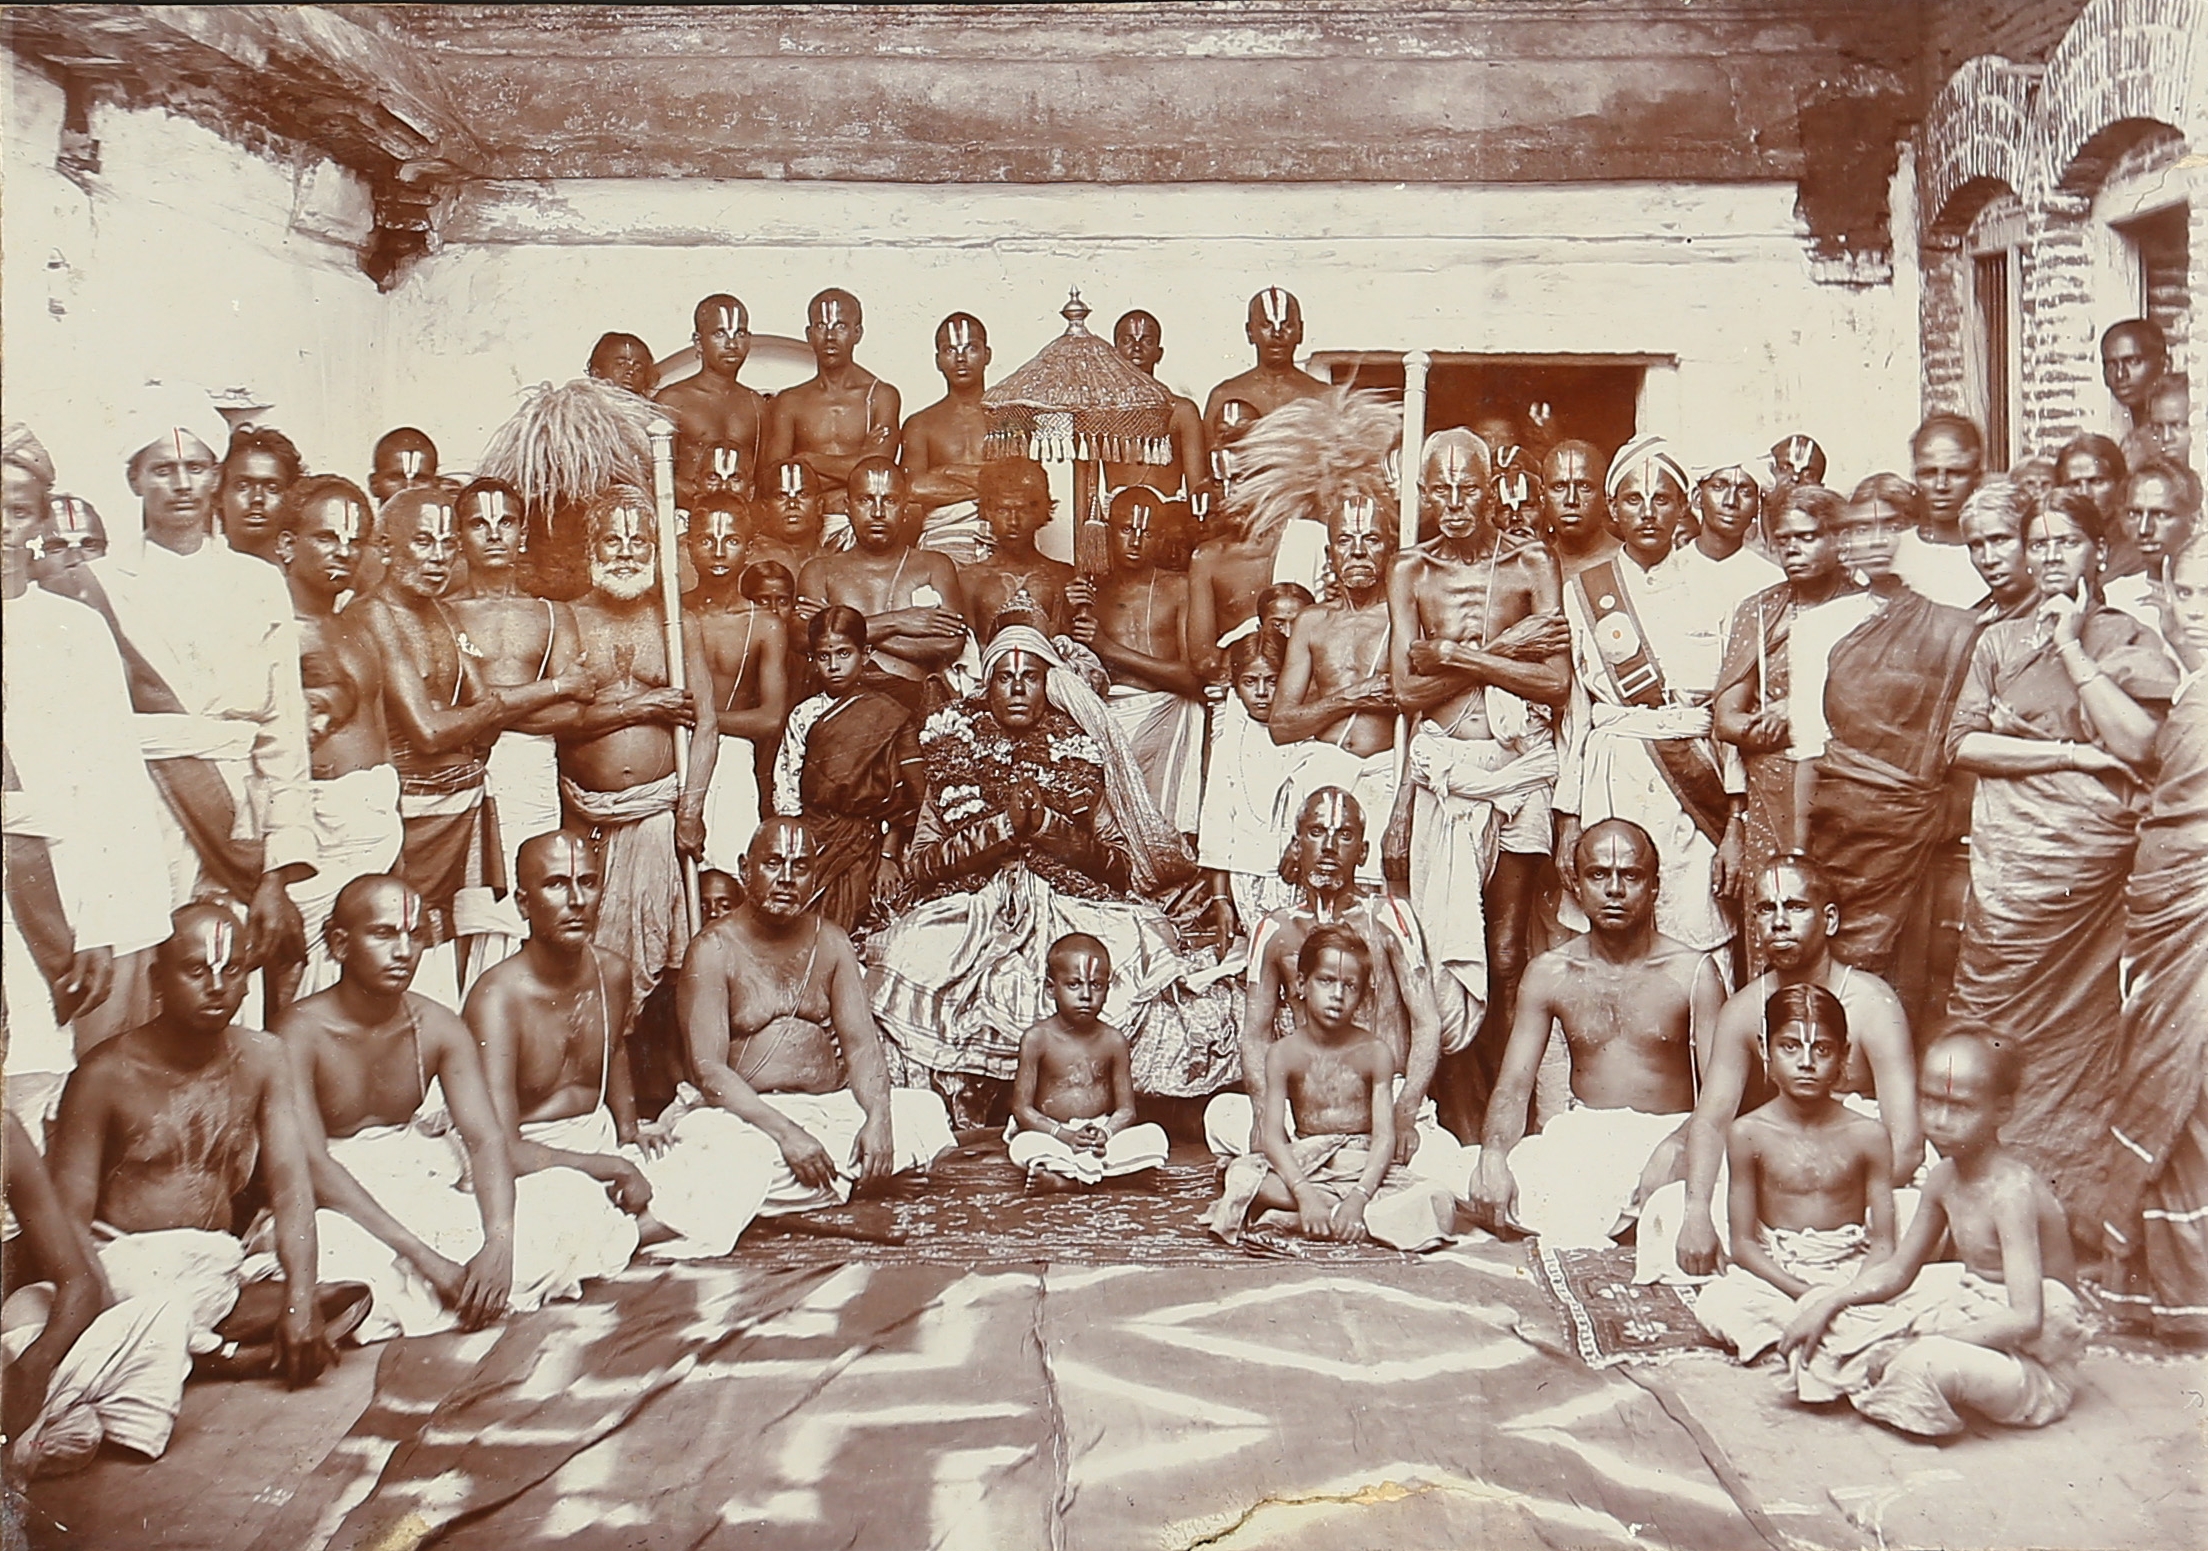 Group of People, Bheemunipatnam (Bheemili), Andhra Pradesh, India | Rare & Old Vintage Photos (1880)